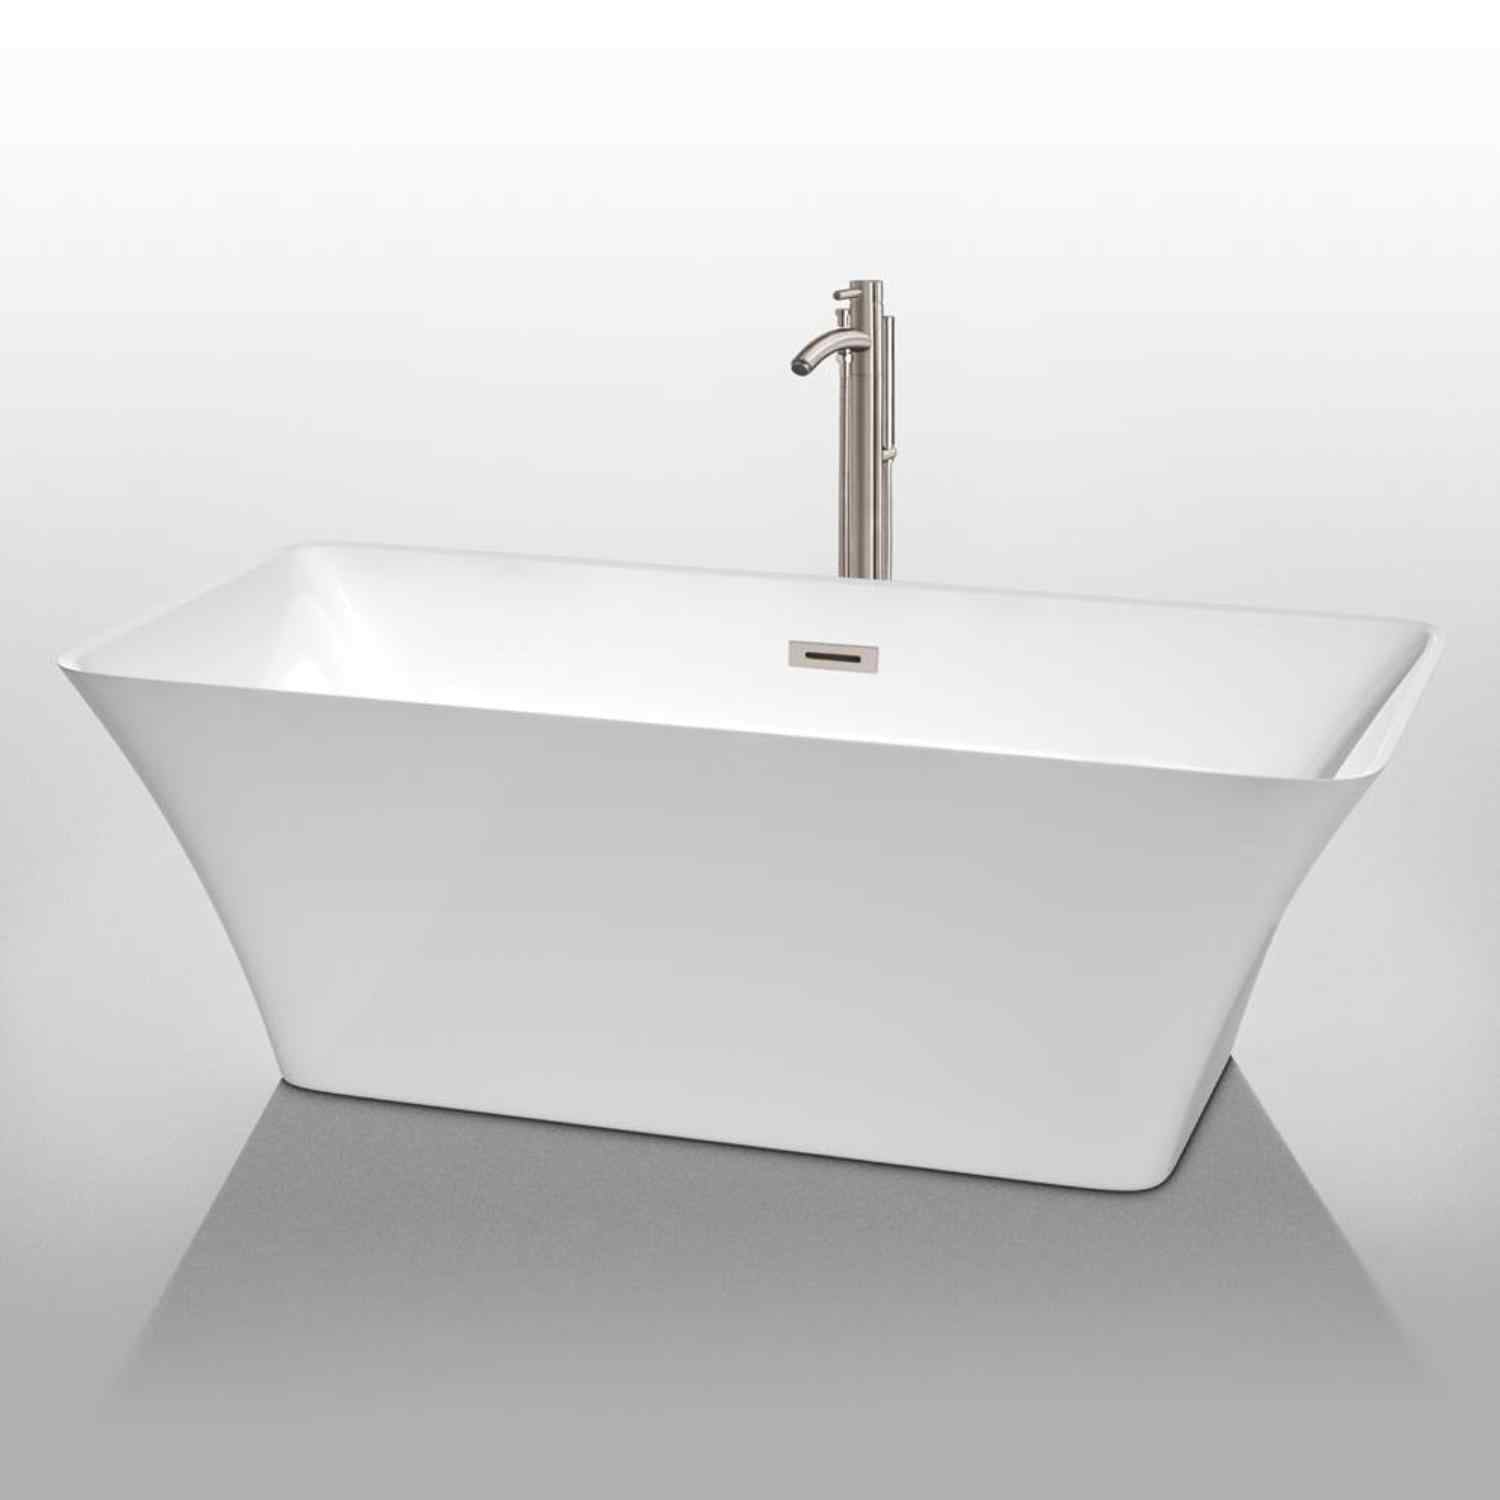 Wyndham collection Tiffany 67 Inch Freestanding Bathtub in White nickel